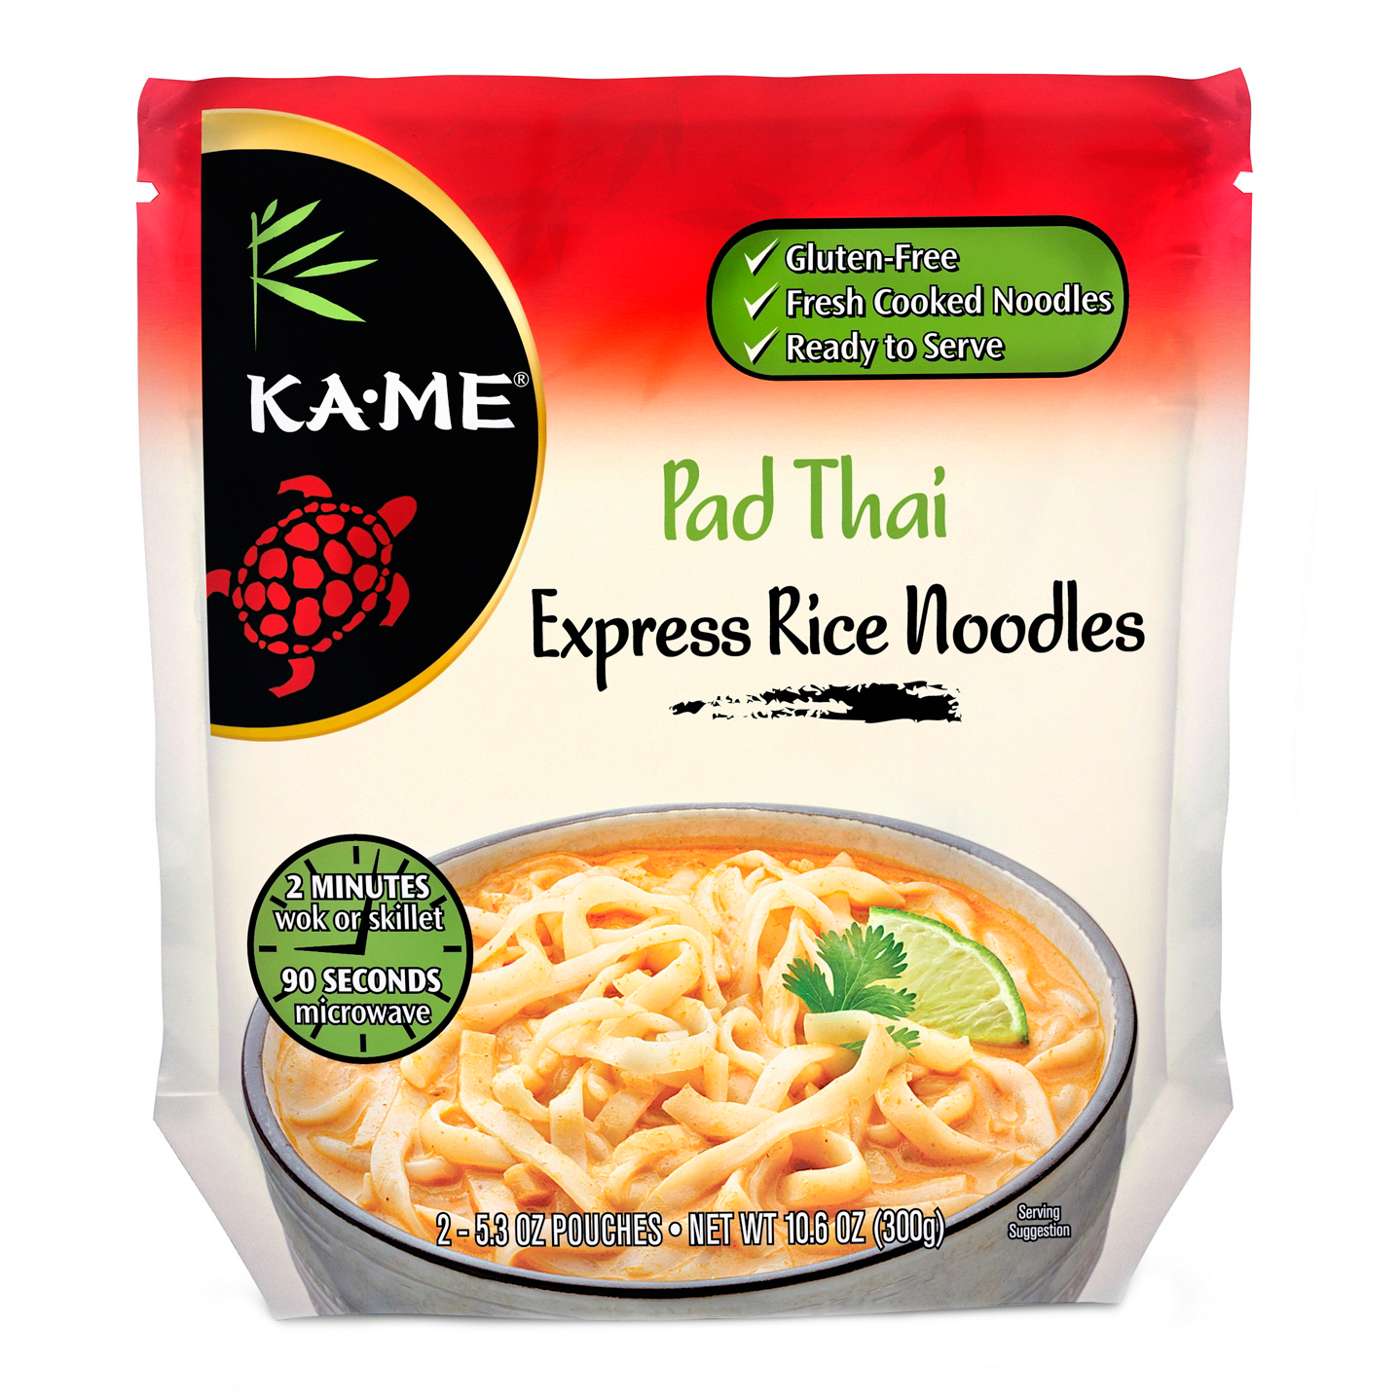 Ka-Me Pad Thai Express Rice Noodles; image 1 of 2